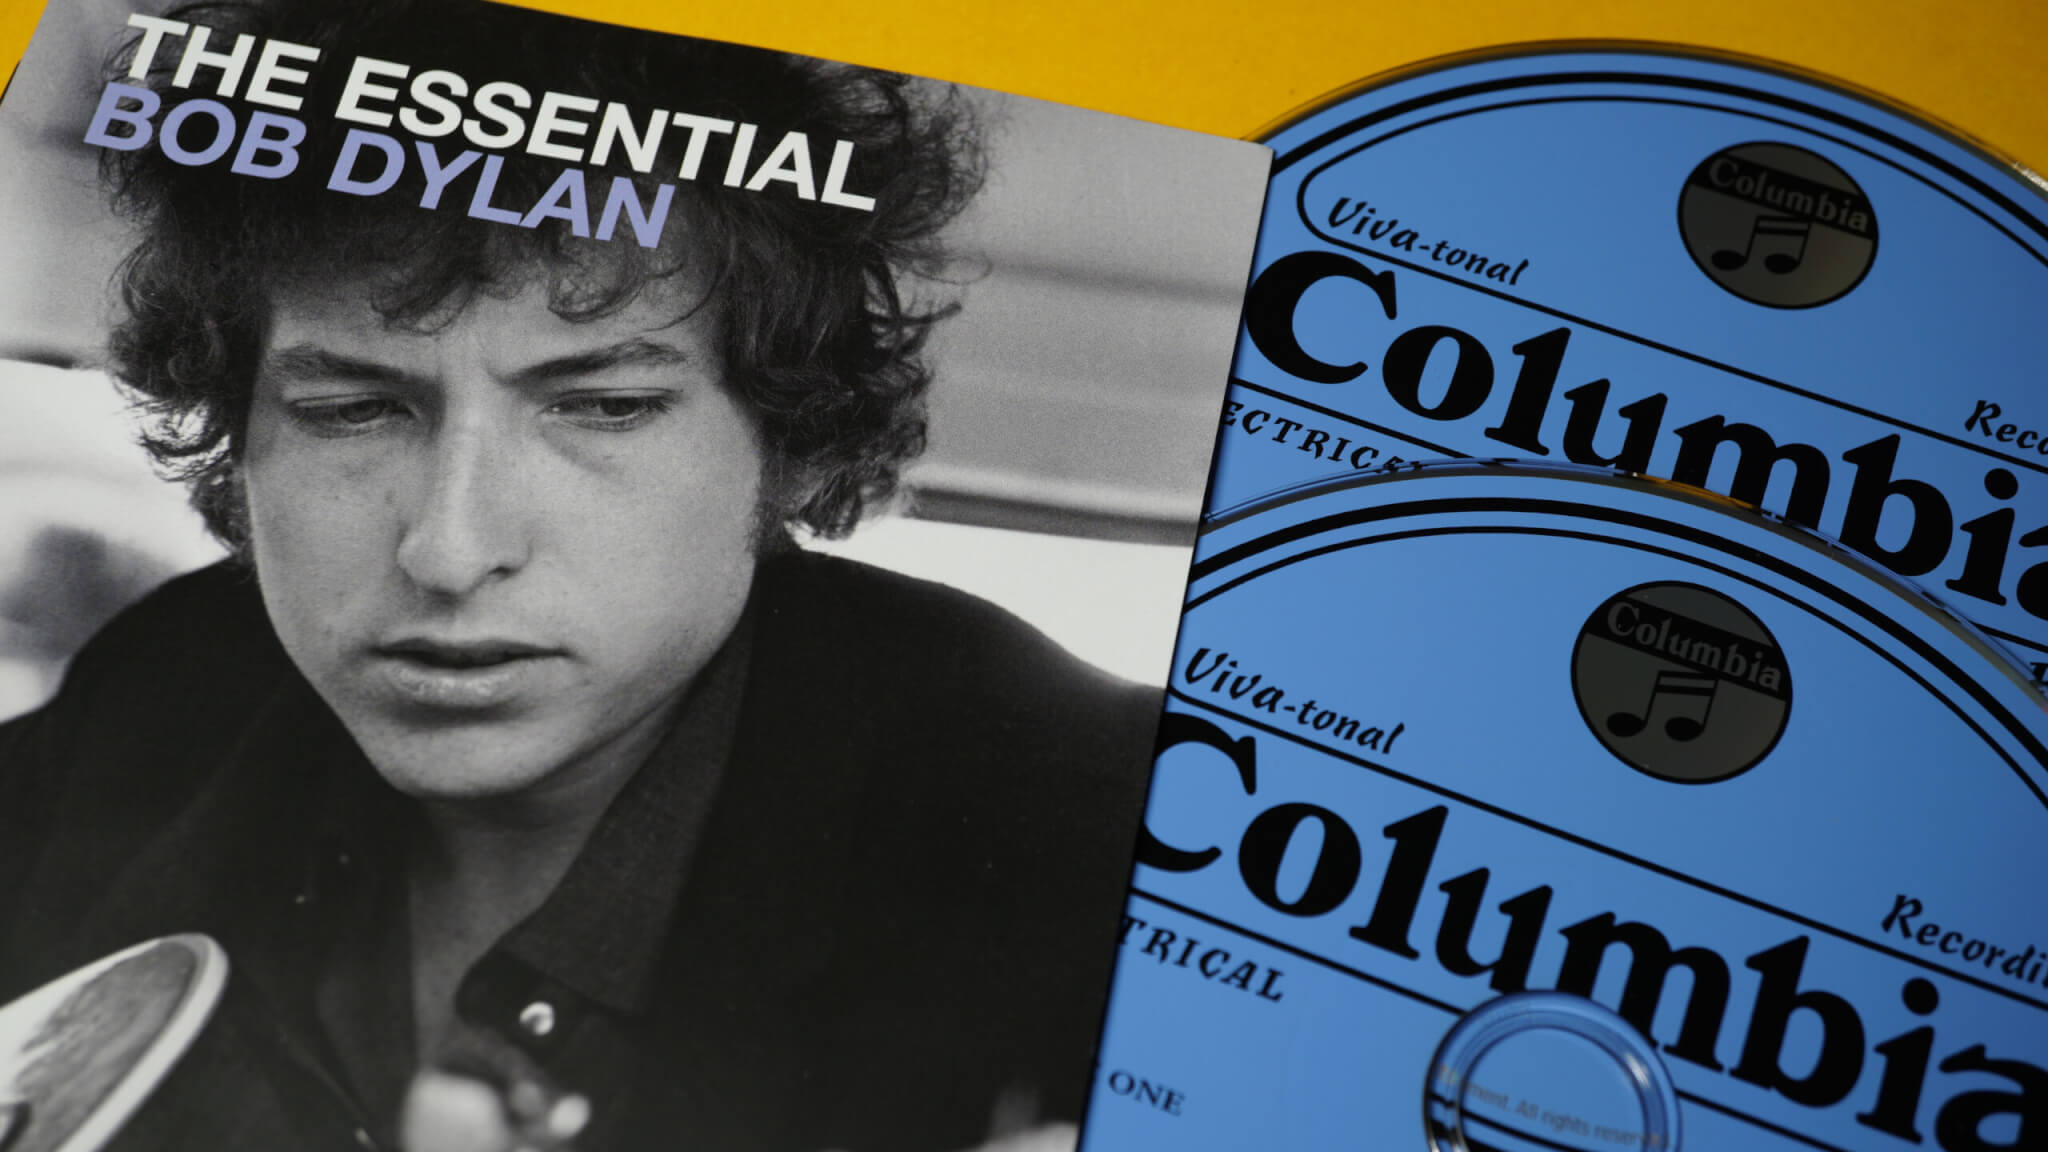 "The Essential Bob Dylan" album 